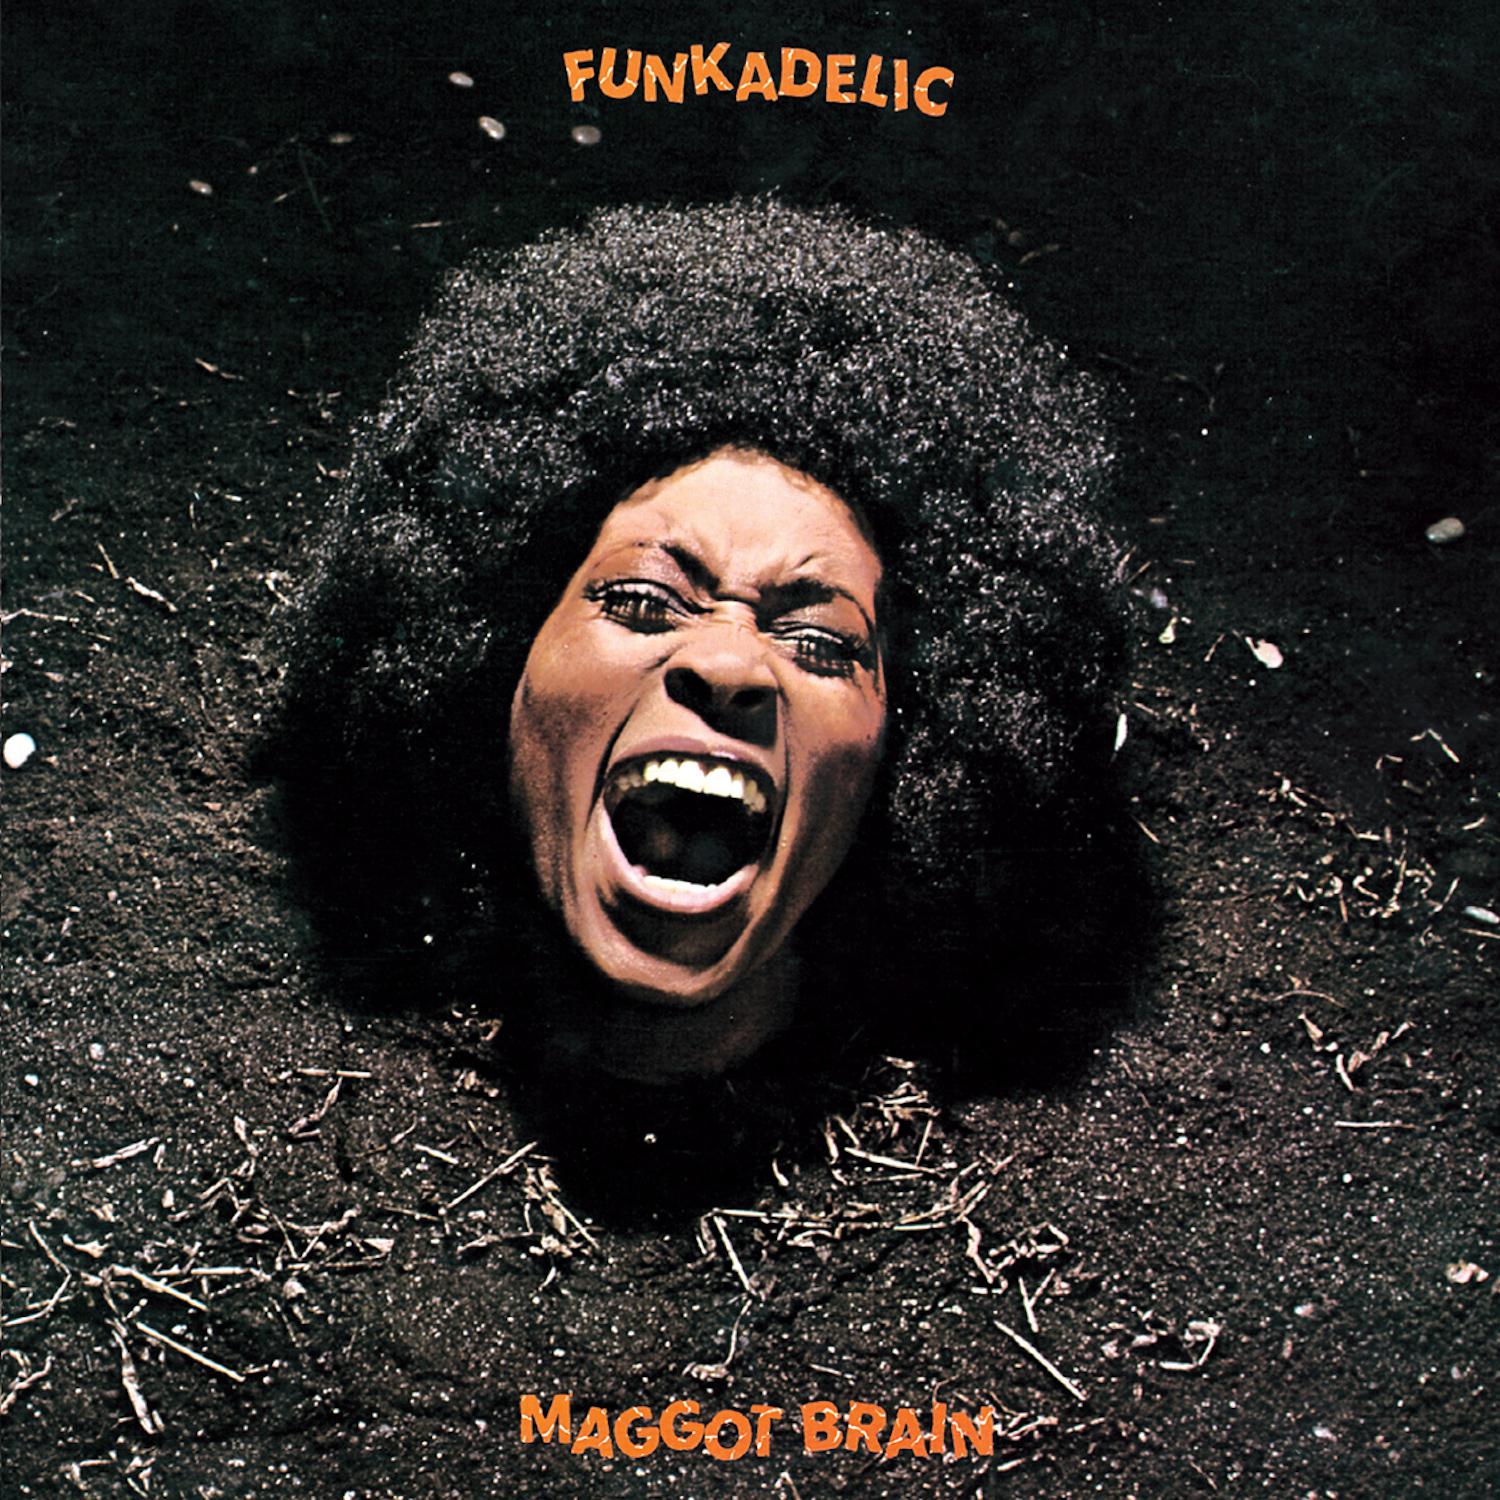 Maggot Brain歌词 歌手Funkadelic-专辑Maggot Brain-单曲《Maggot Brain》LRC歌词下载